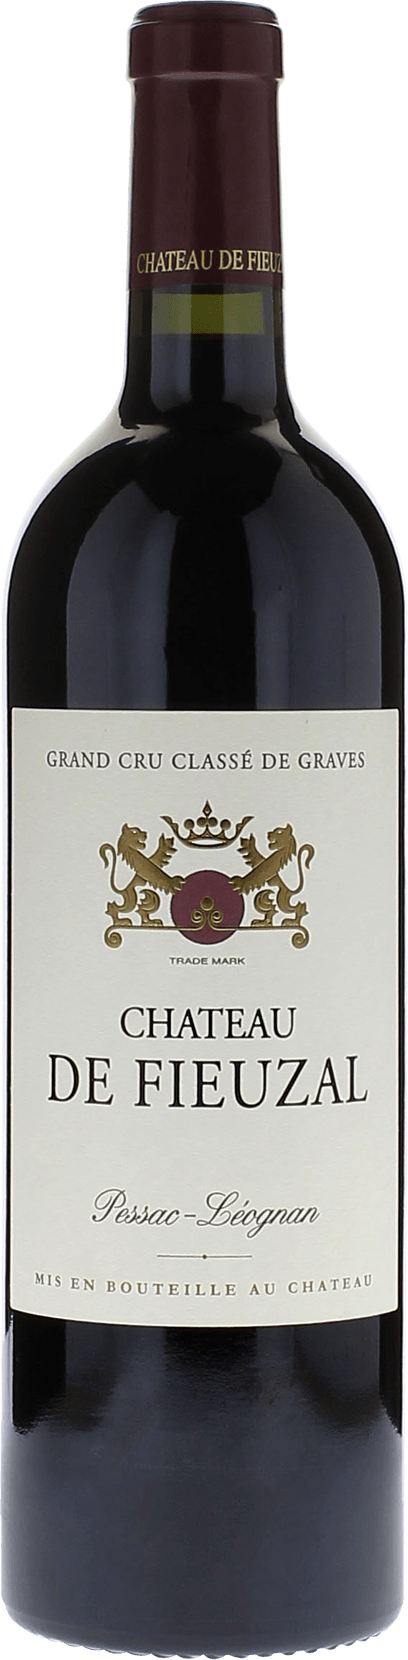 Fieuzal rouge 1997 cru class Pessac-Lognan, Bordeaux rouge